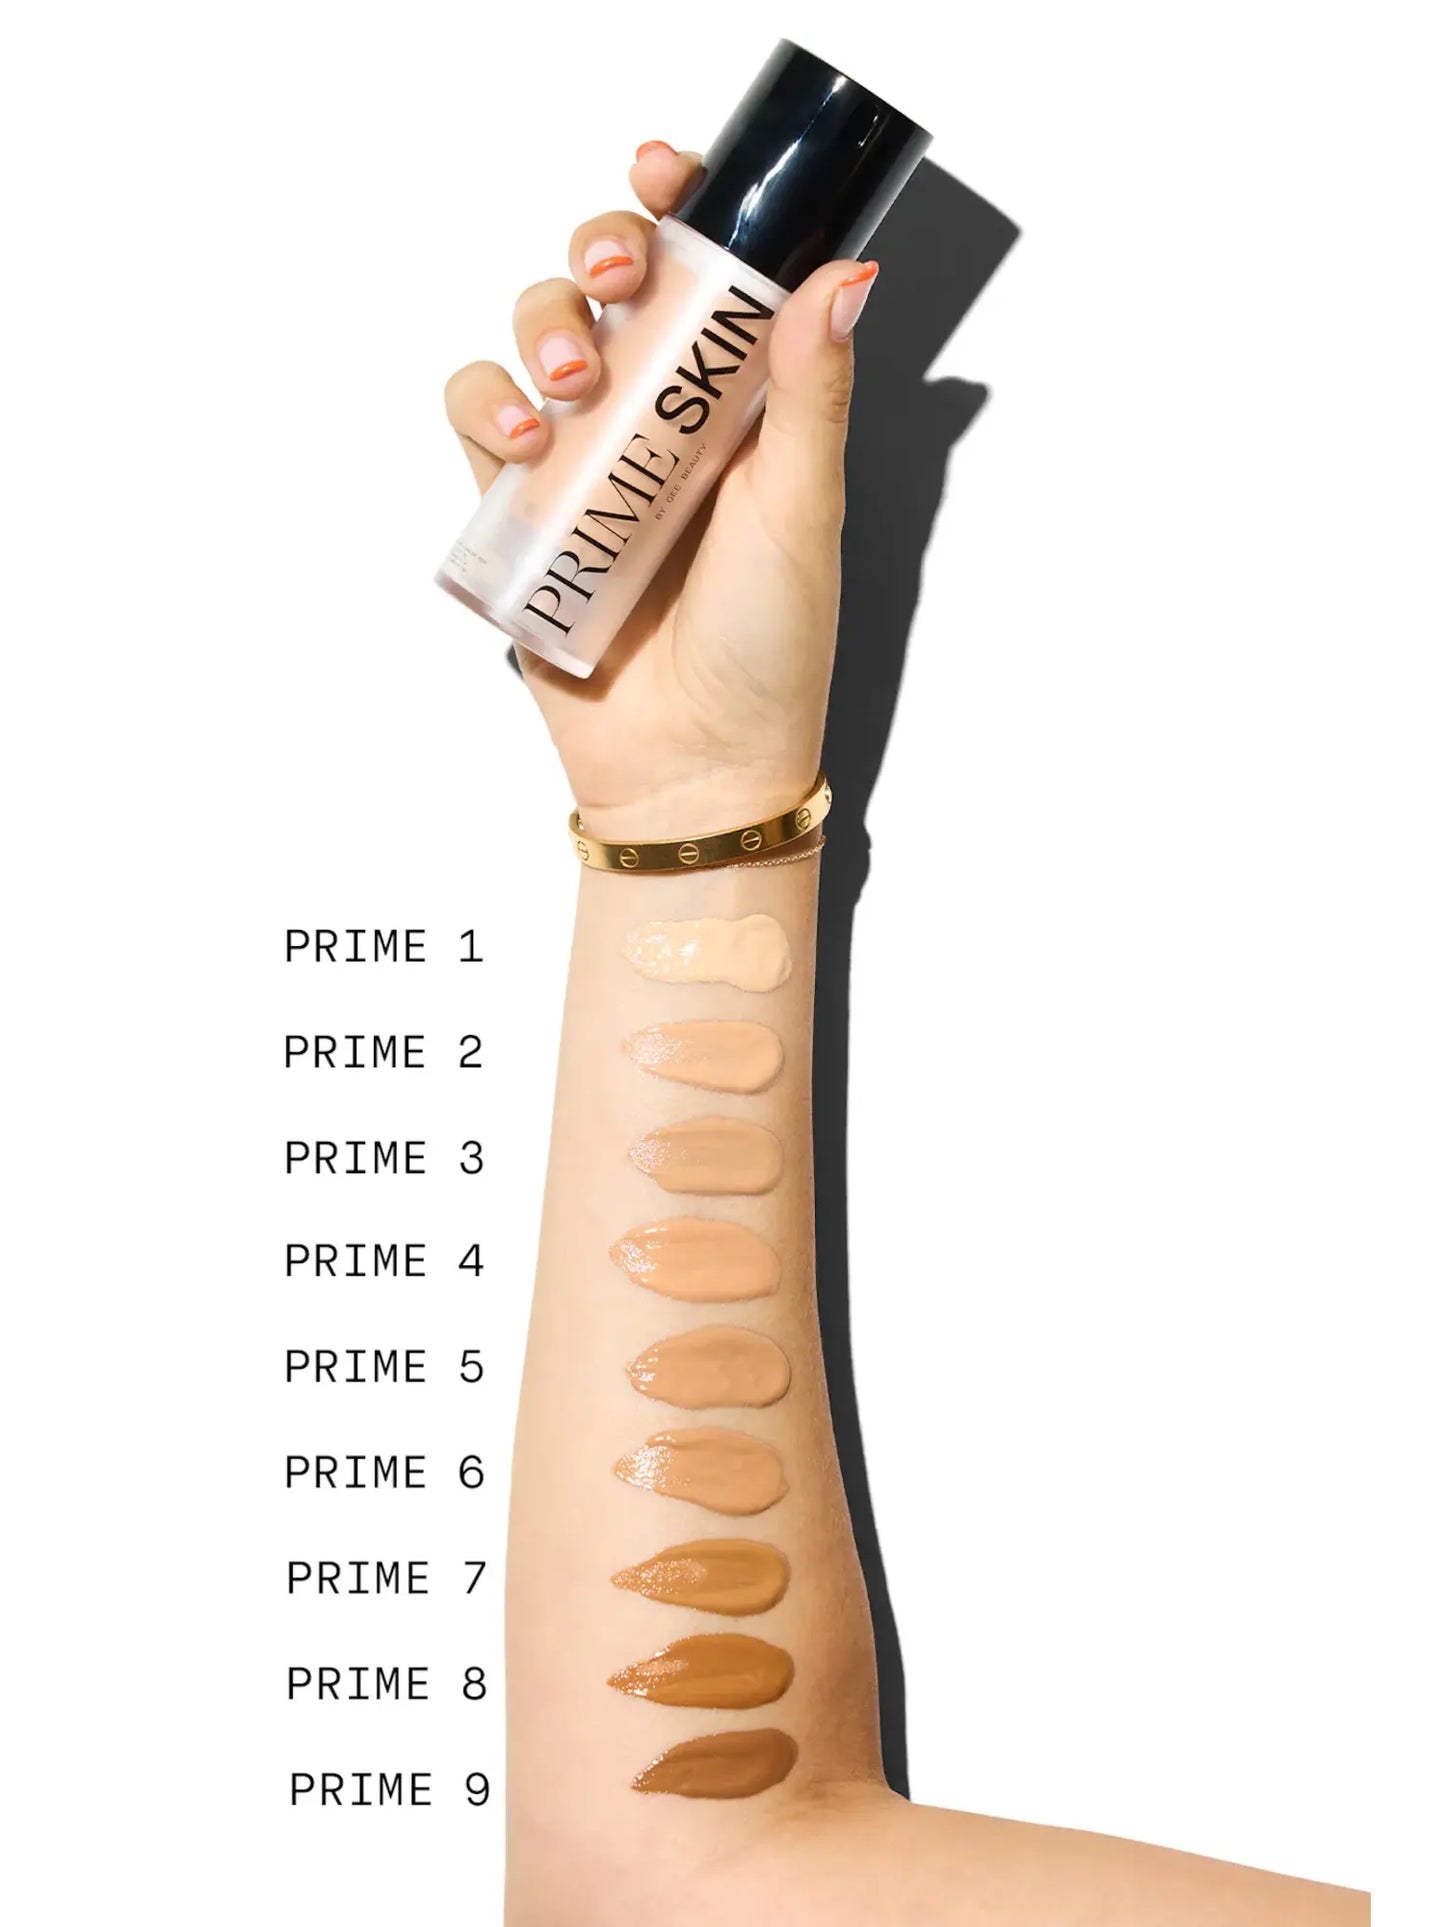 Prime Skin 3 (Light/Medium)